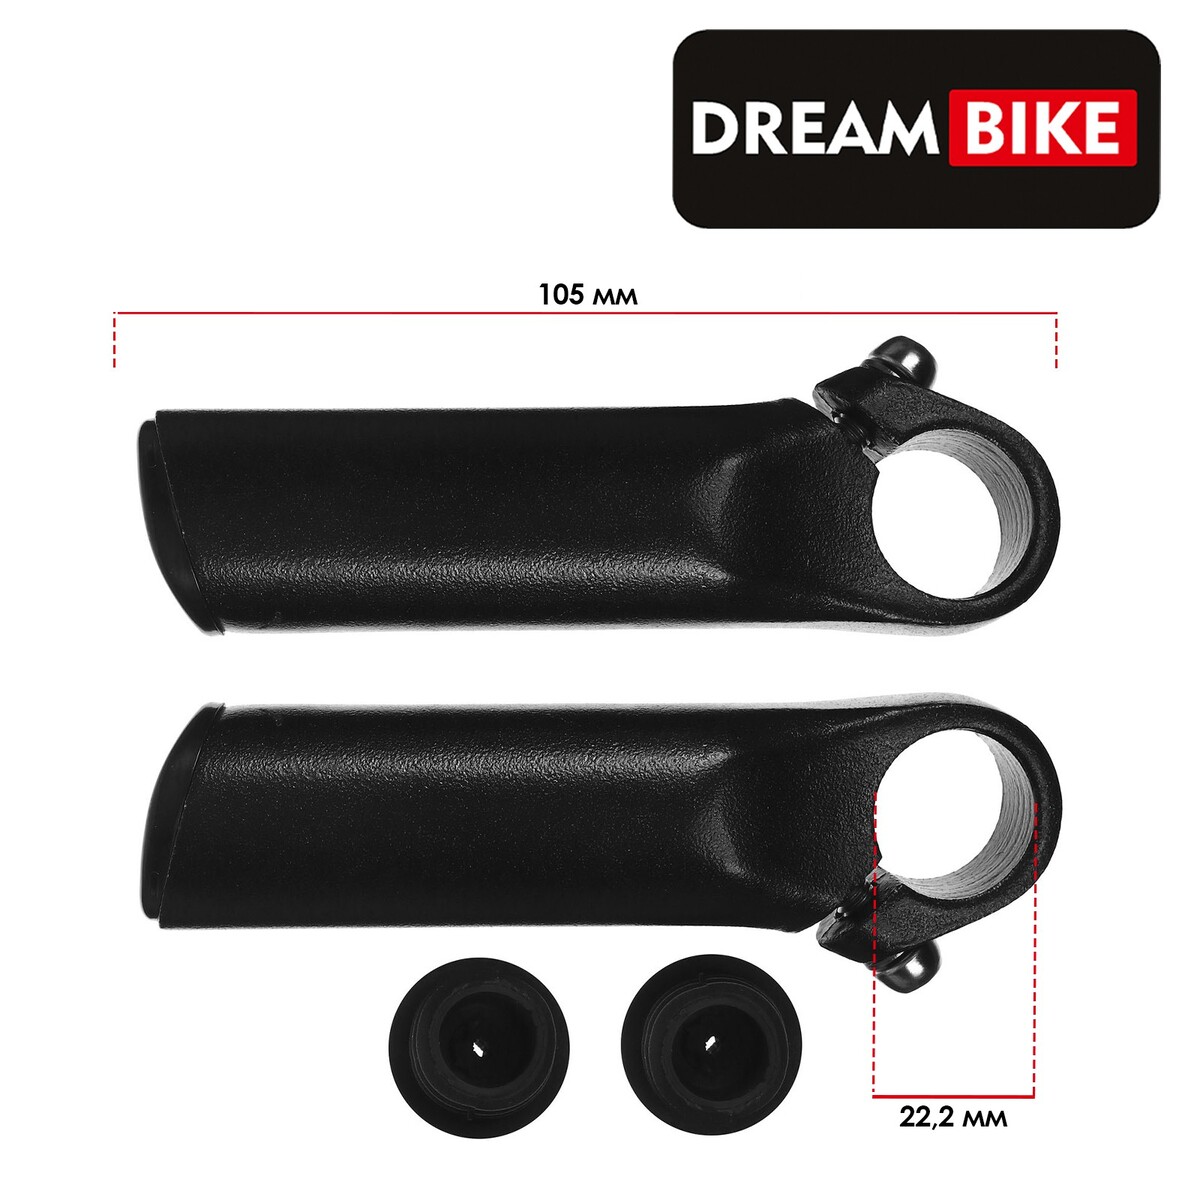 Рога на руль dream bike, алюминиевые, цвет черный Dream Bike